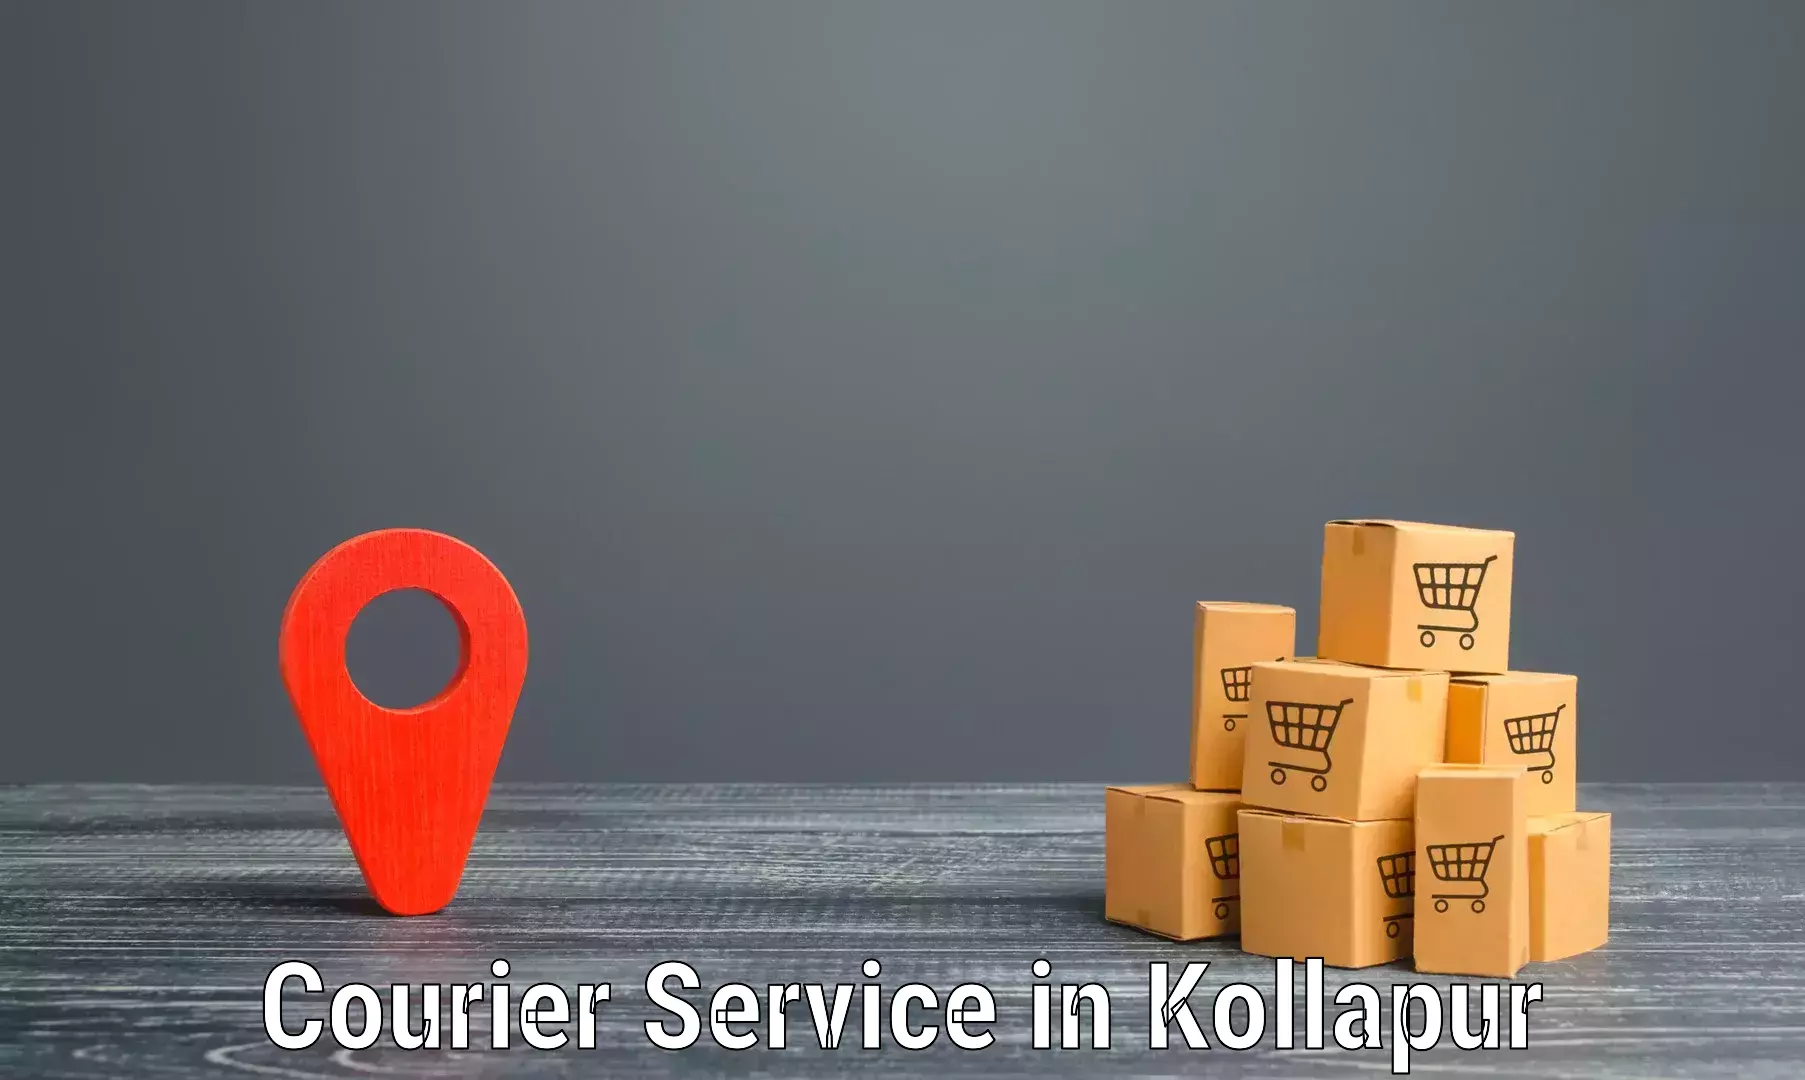 Efficient parcel transport in Kollapur